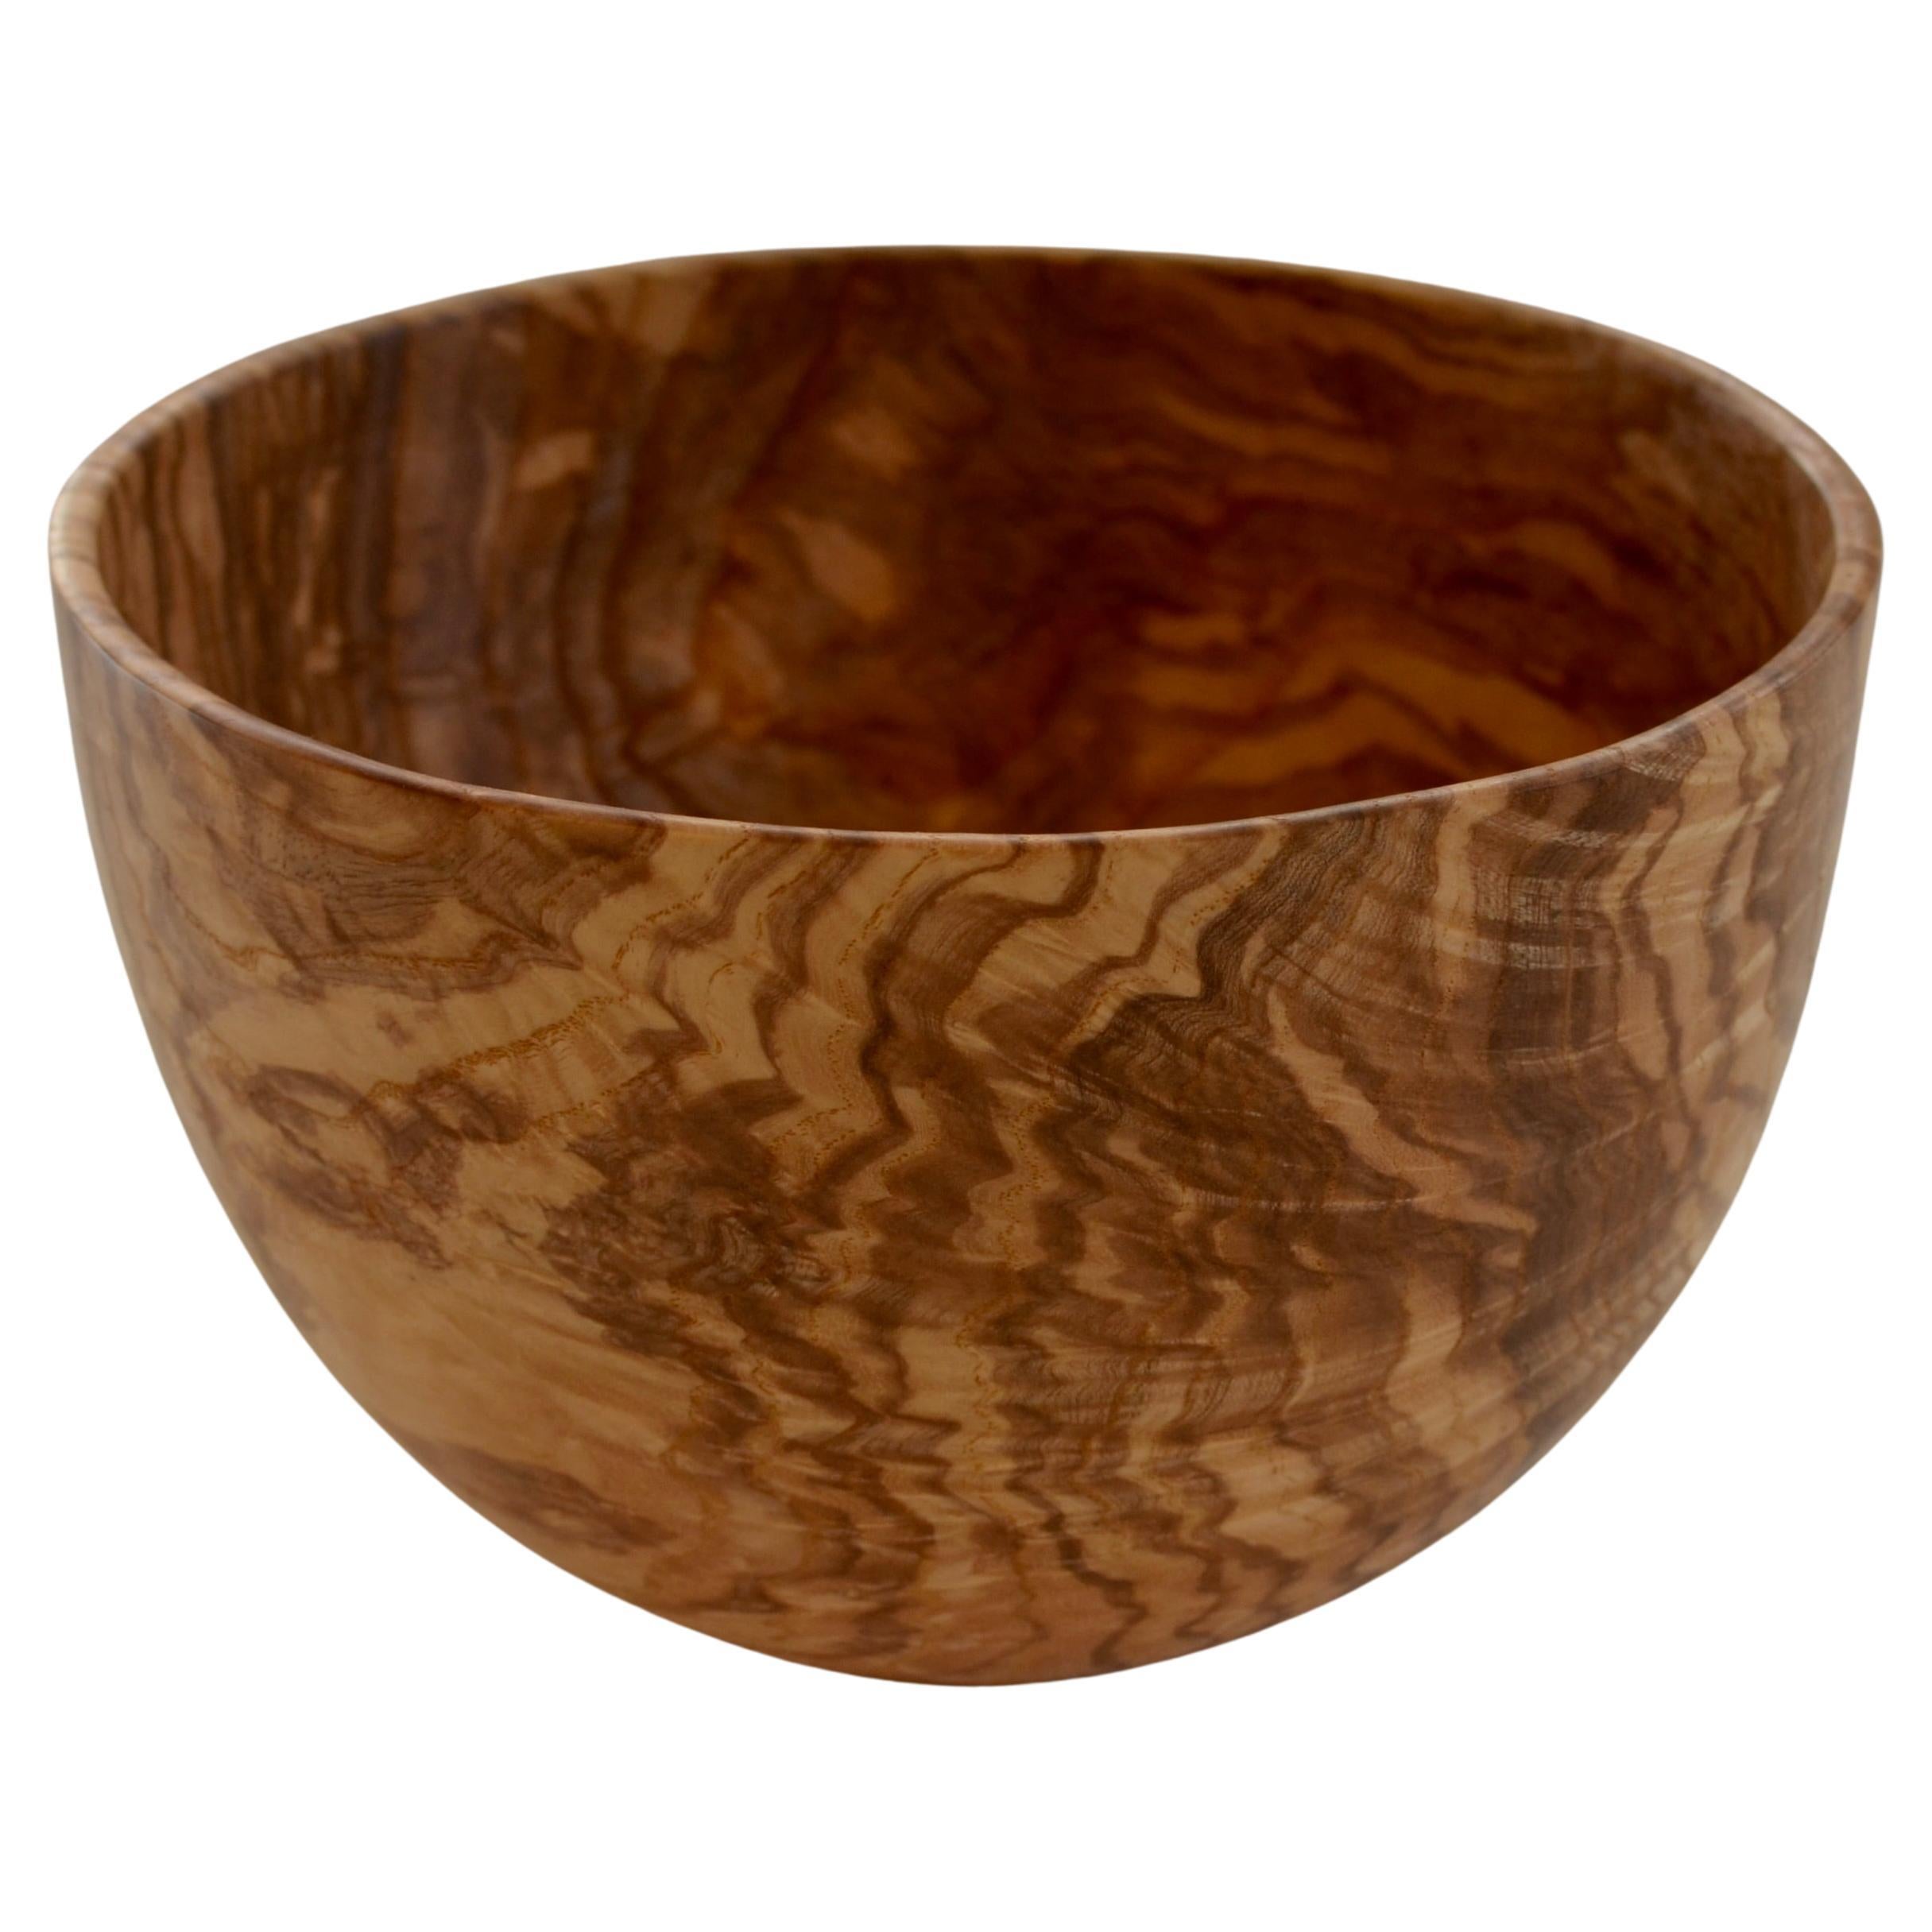 Hand-Carved Ash Wood Bowl